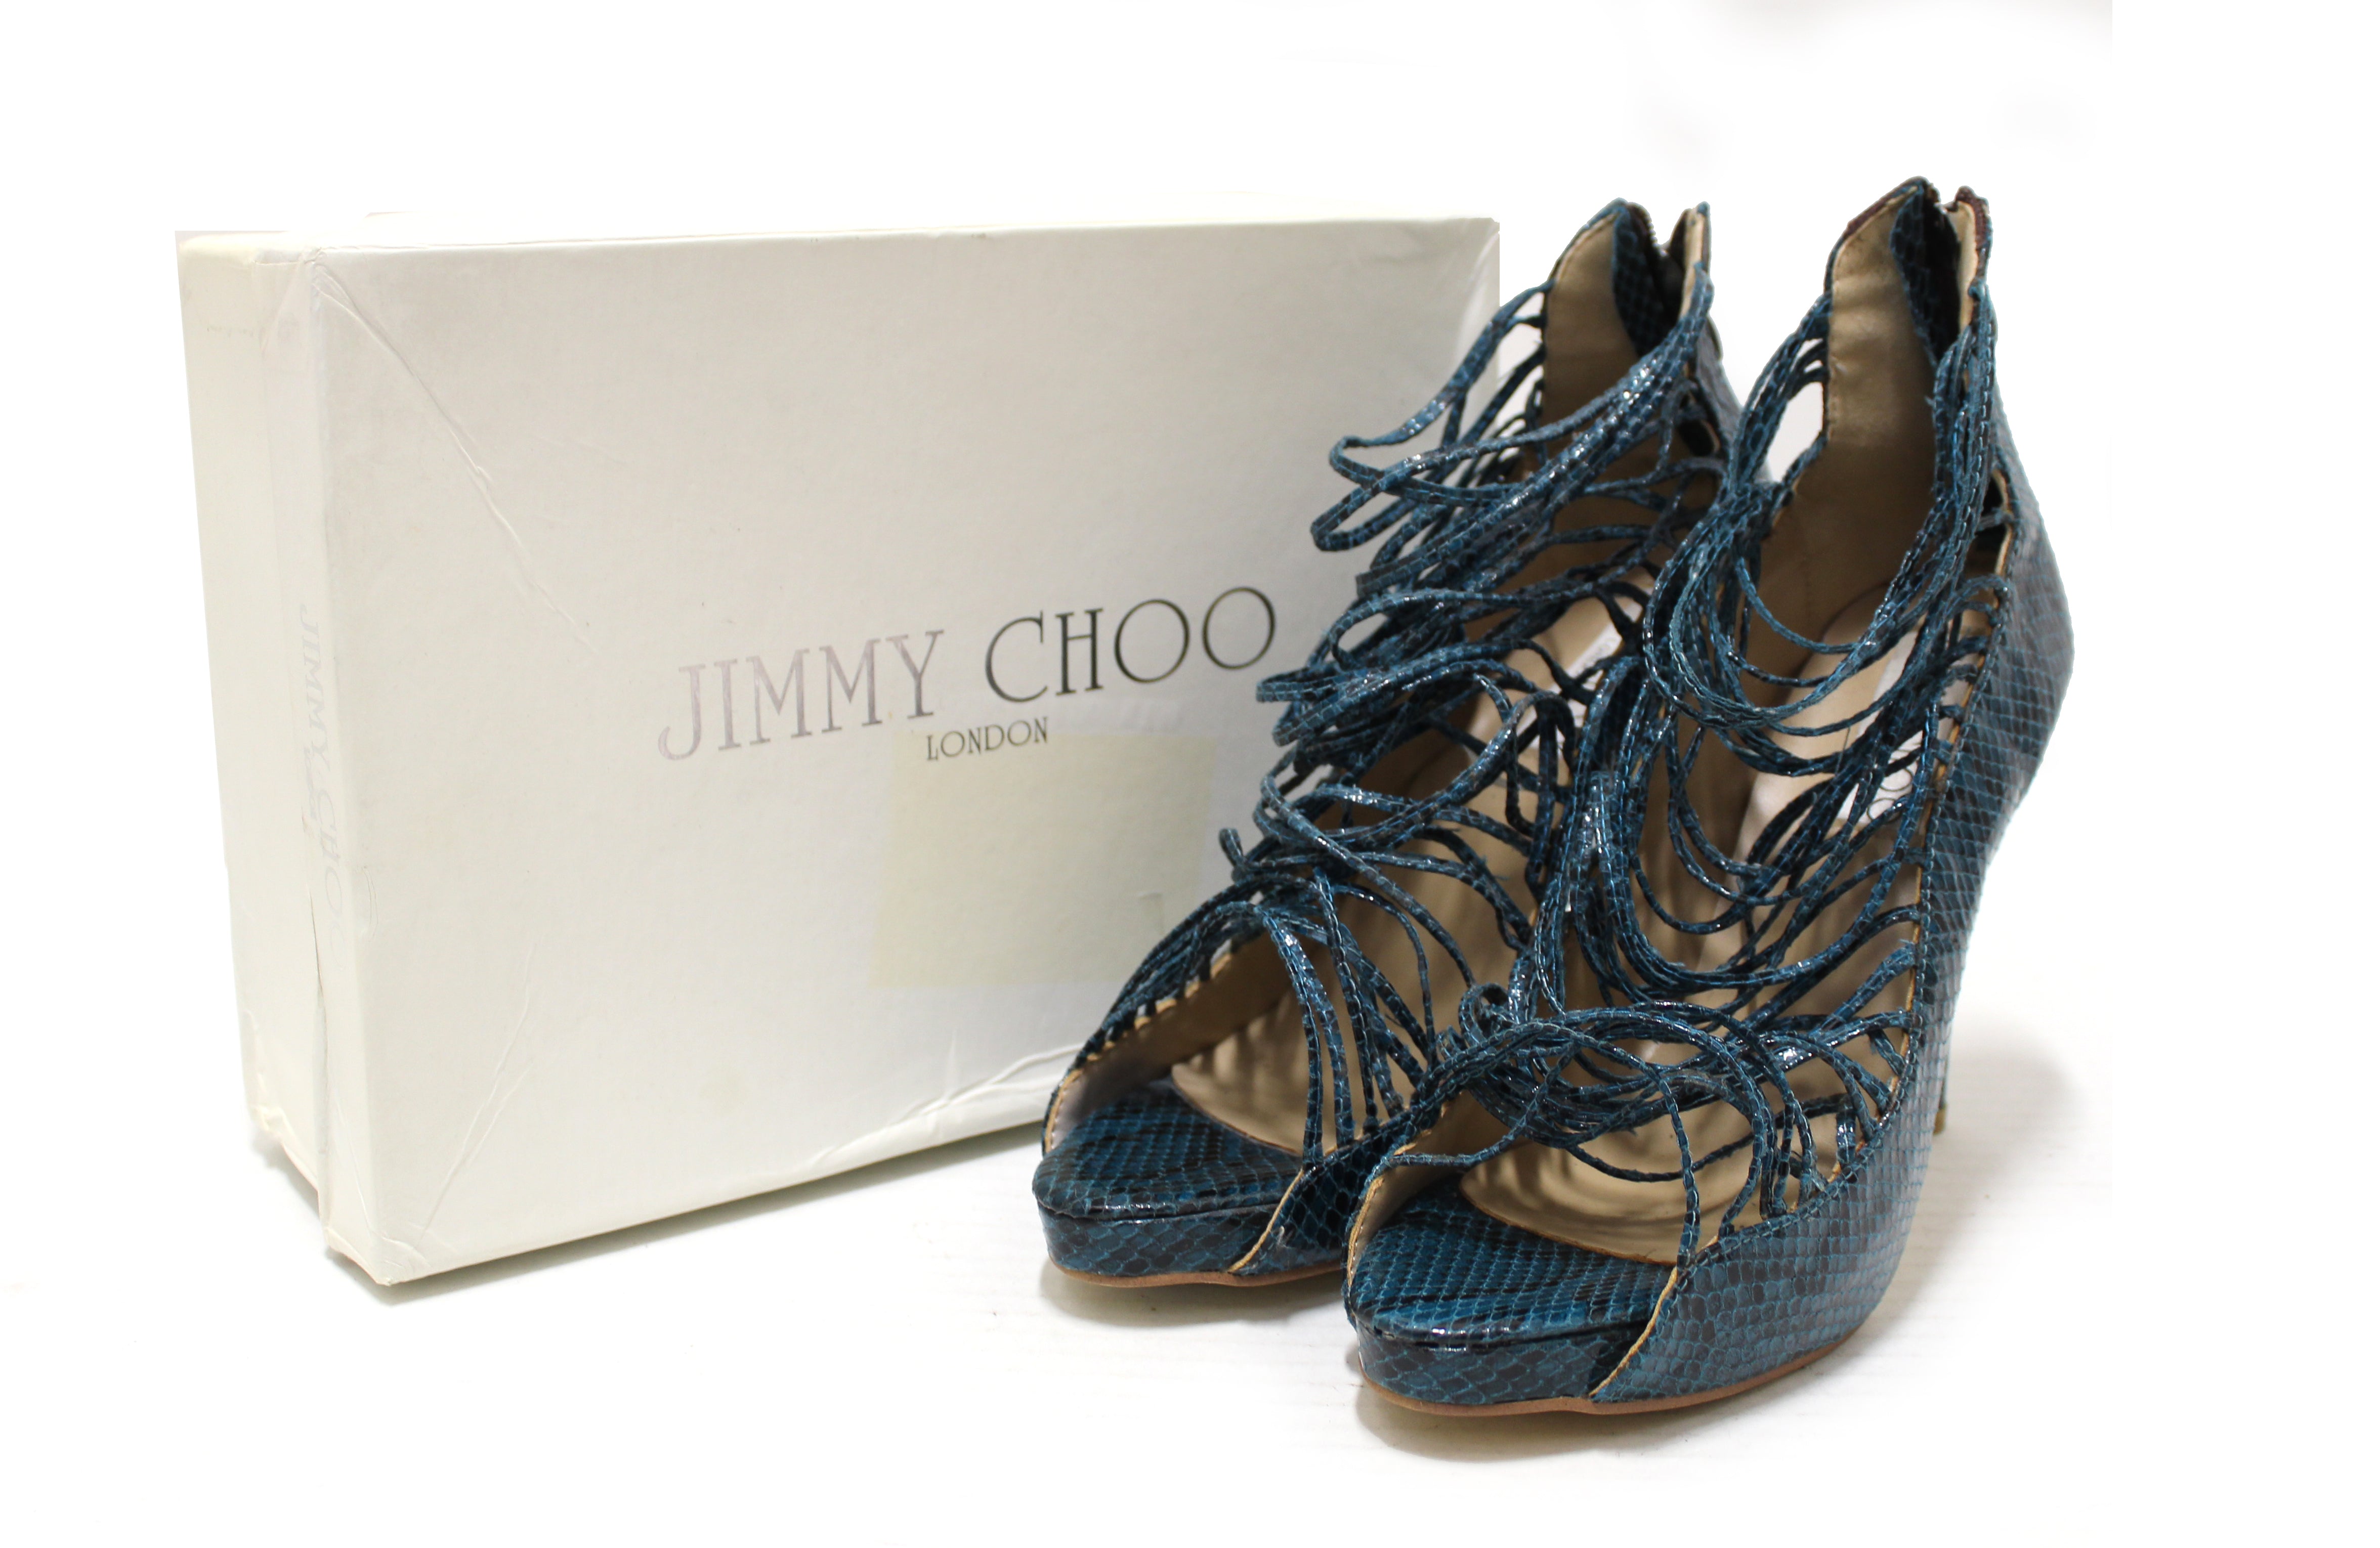 Authentic Jimmy Choo Green Snakeskin Embossed Strap Pump Heel size 41